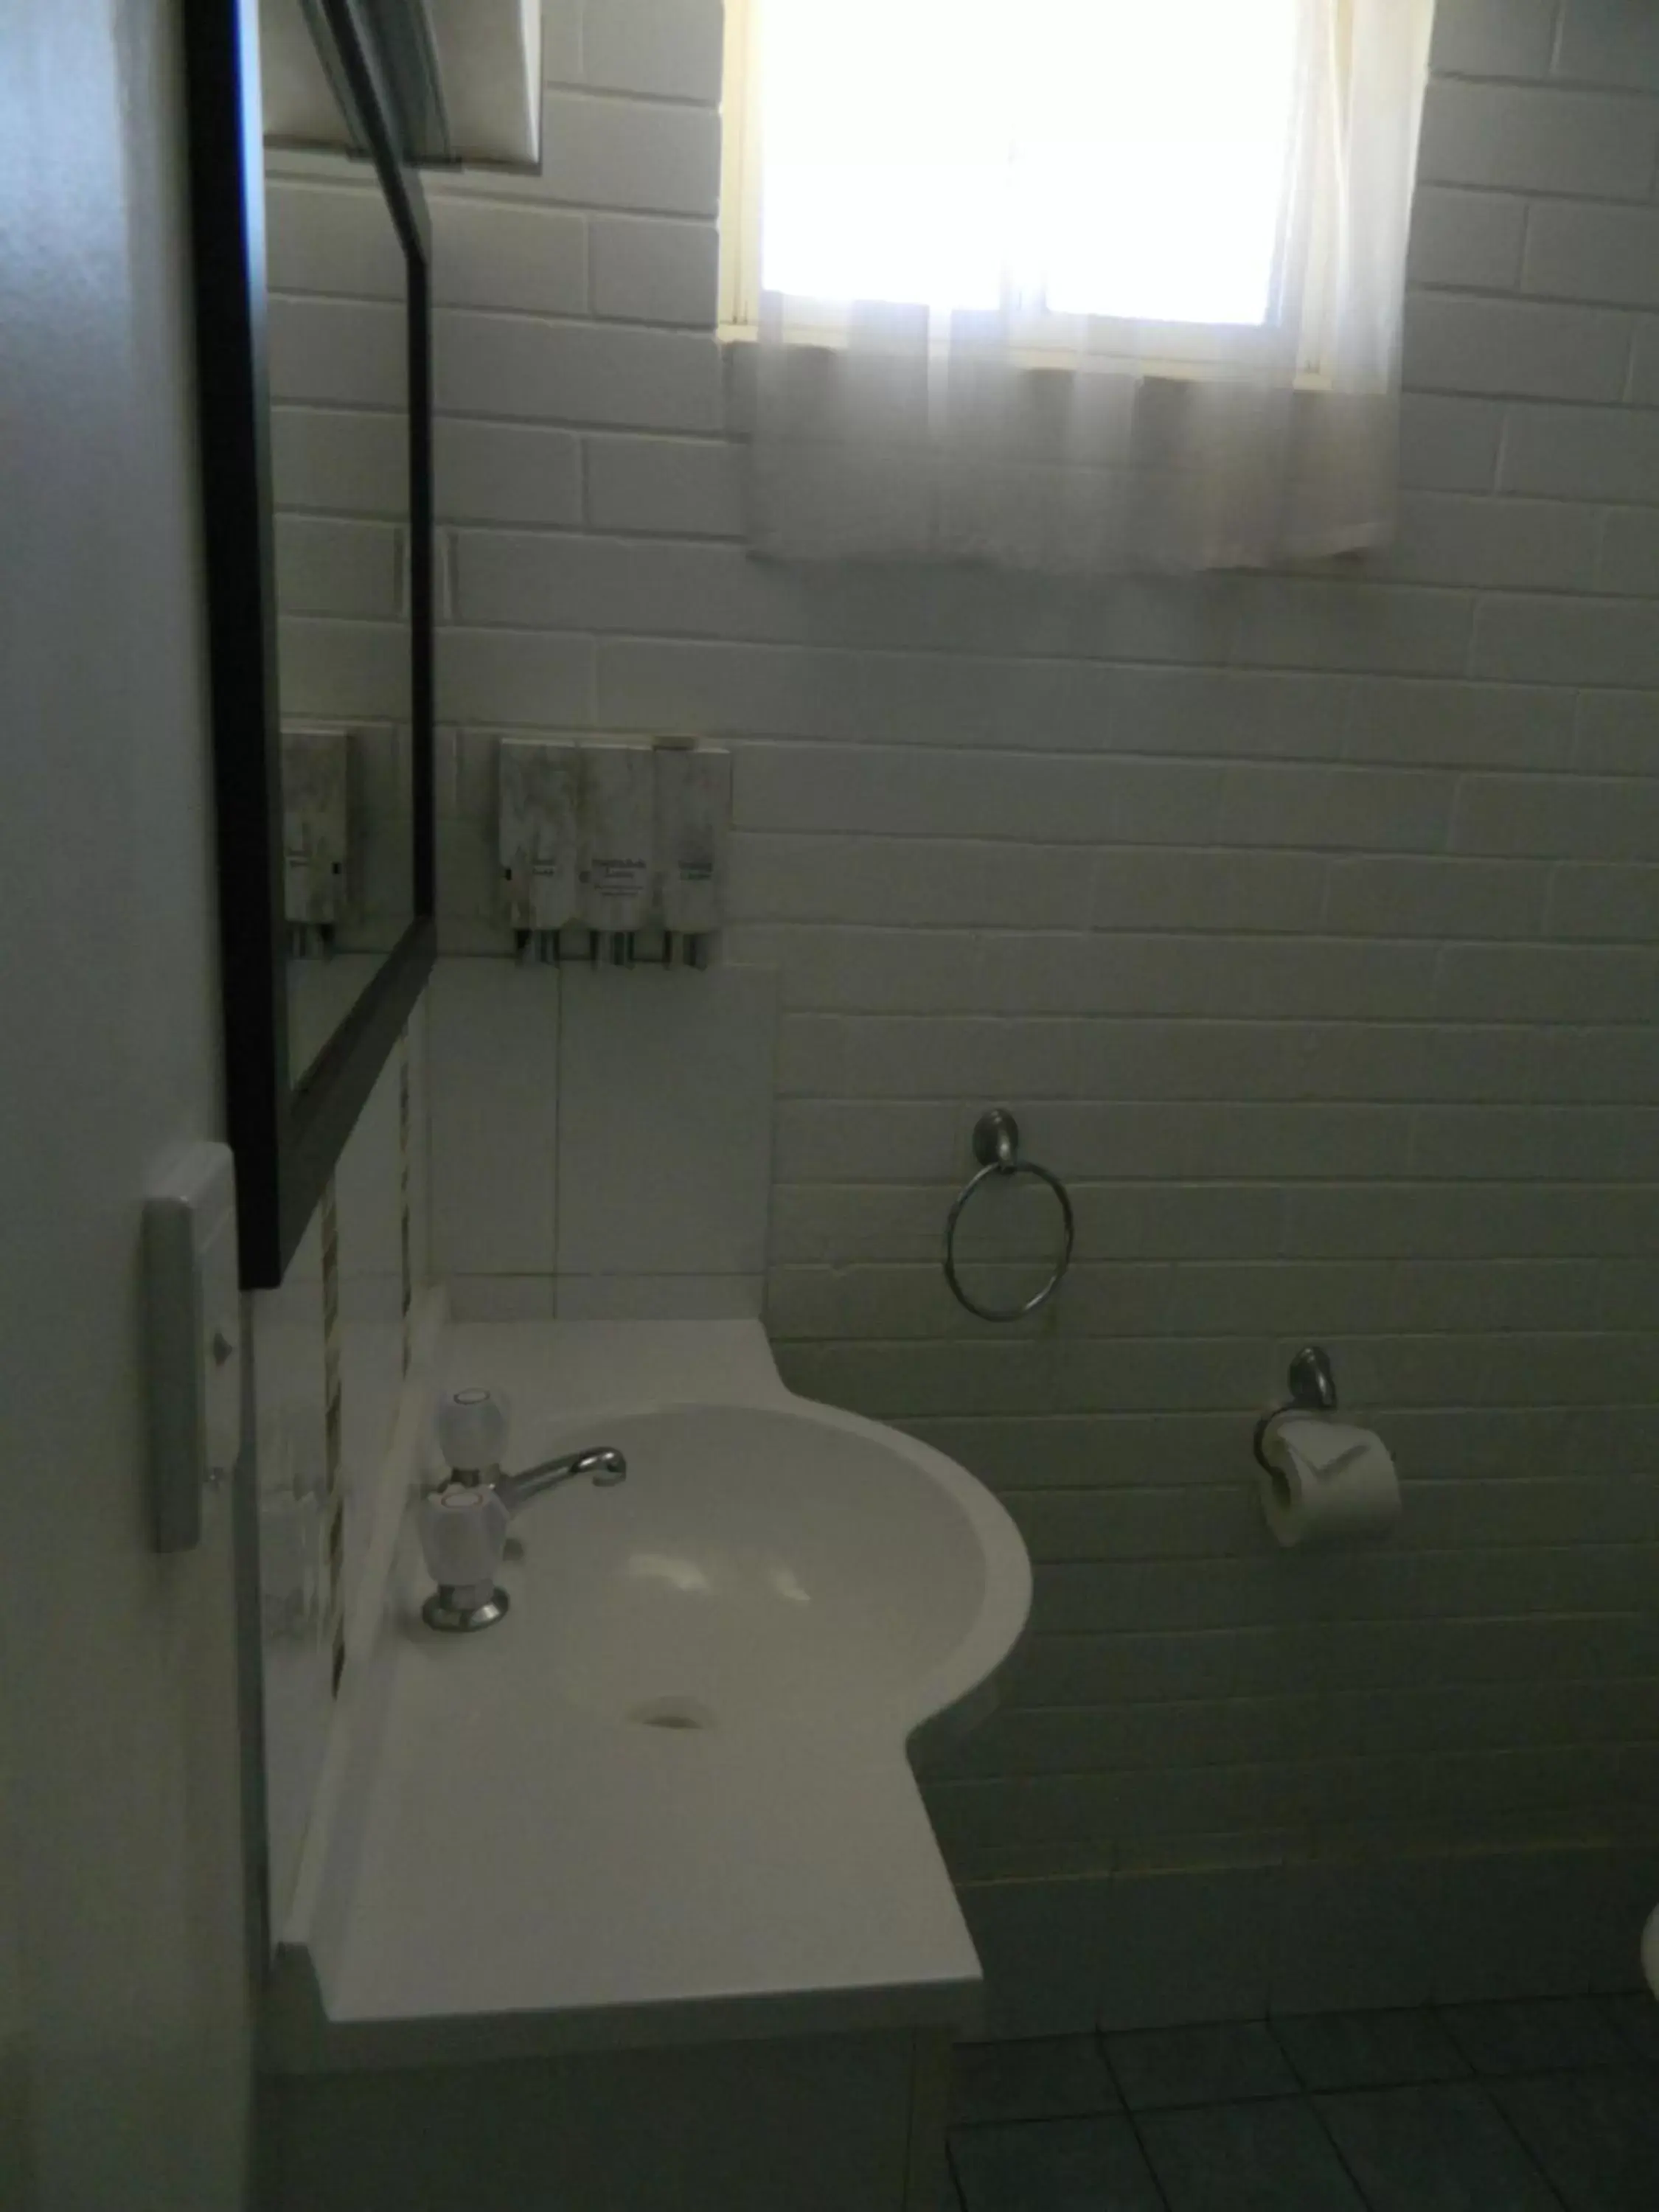 Bathroom in Coachman Motel